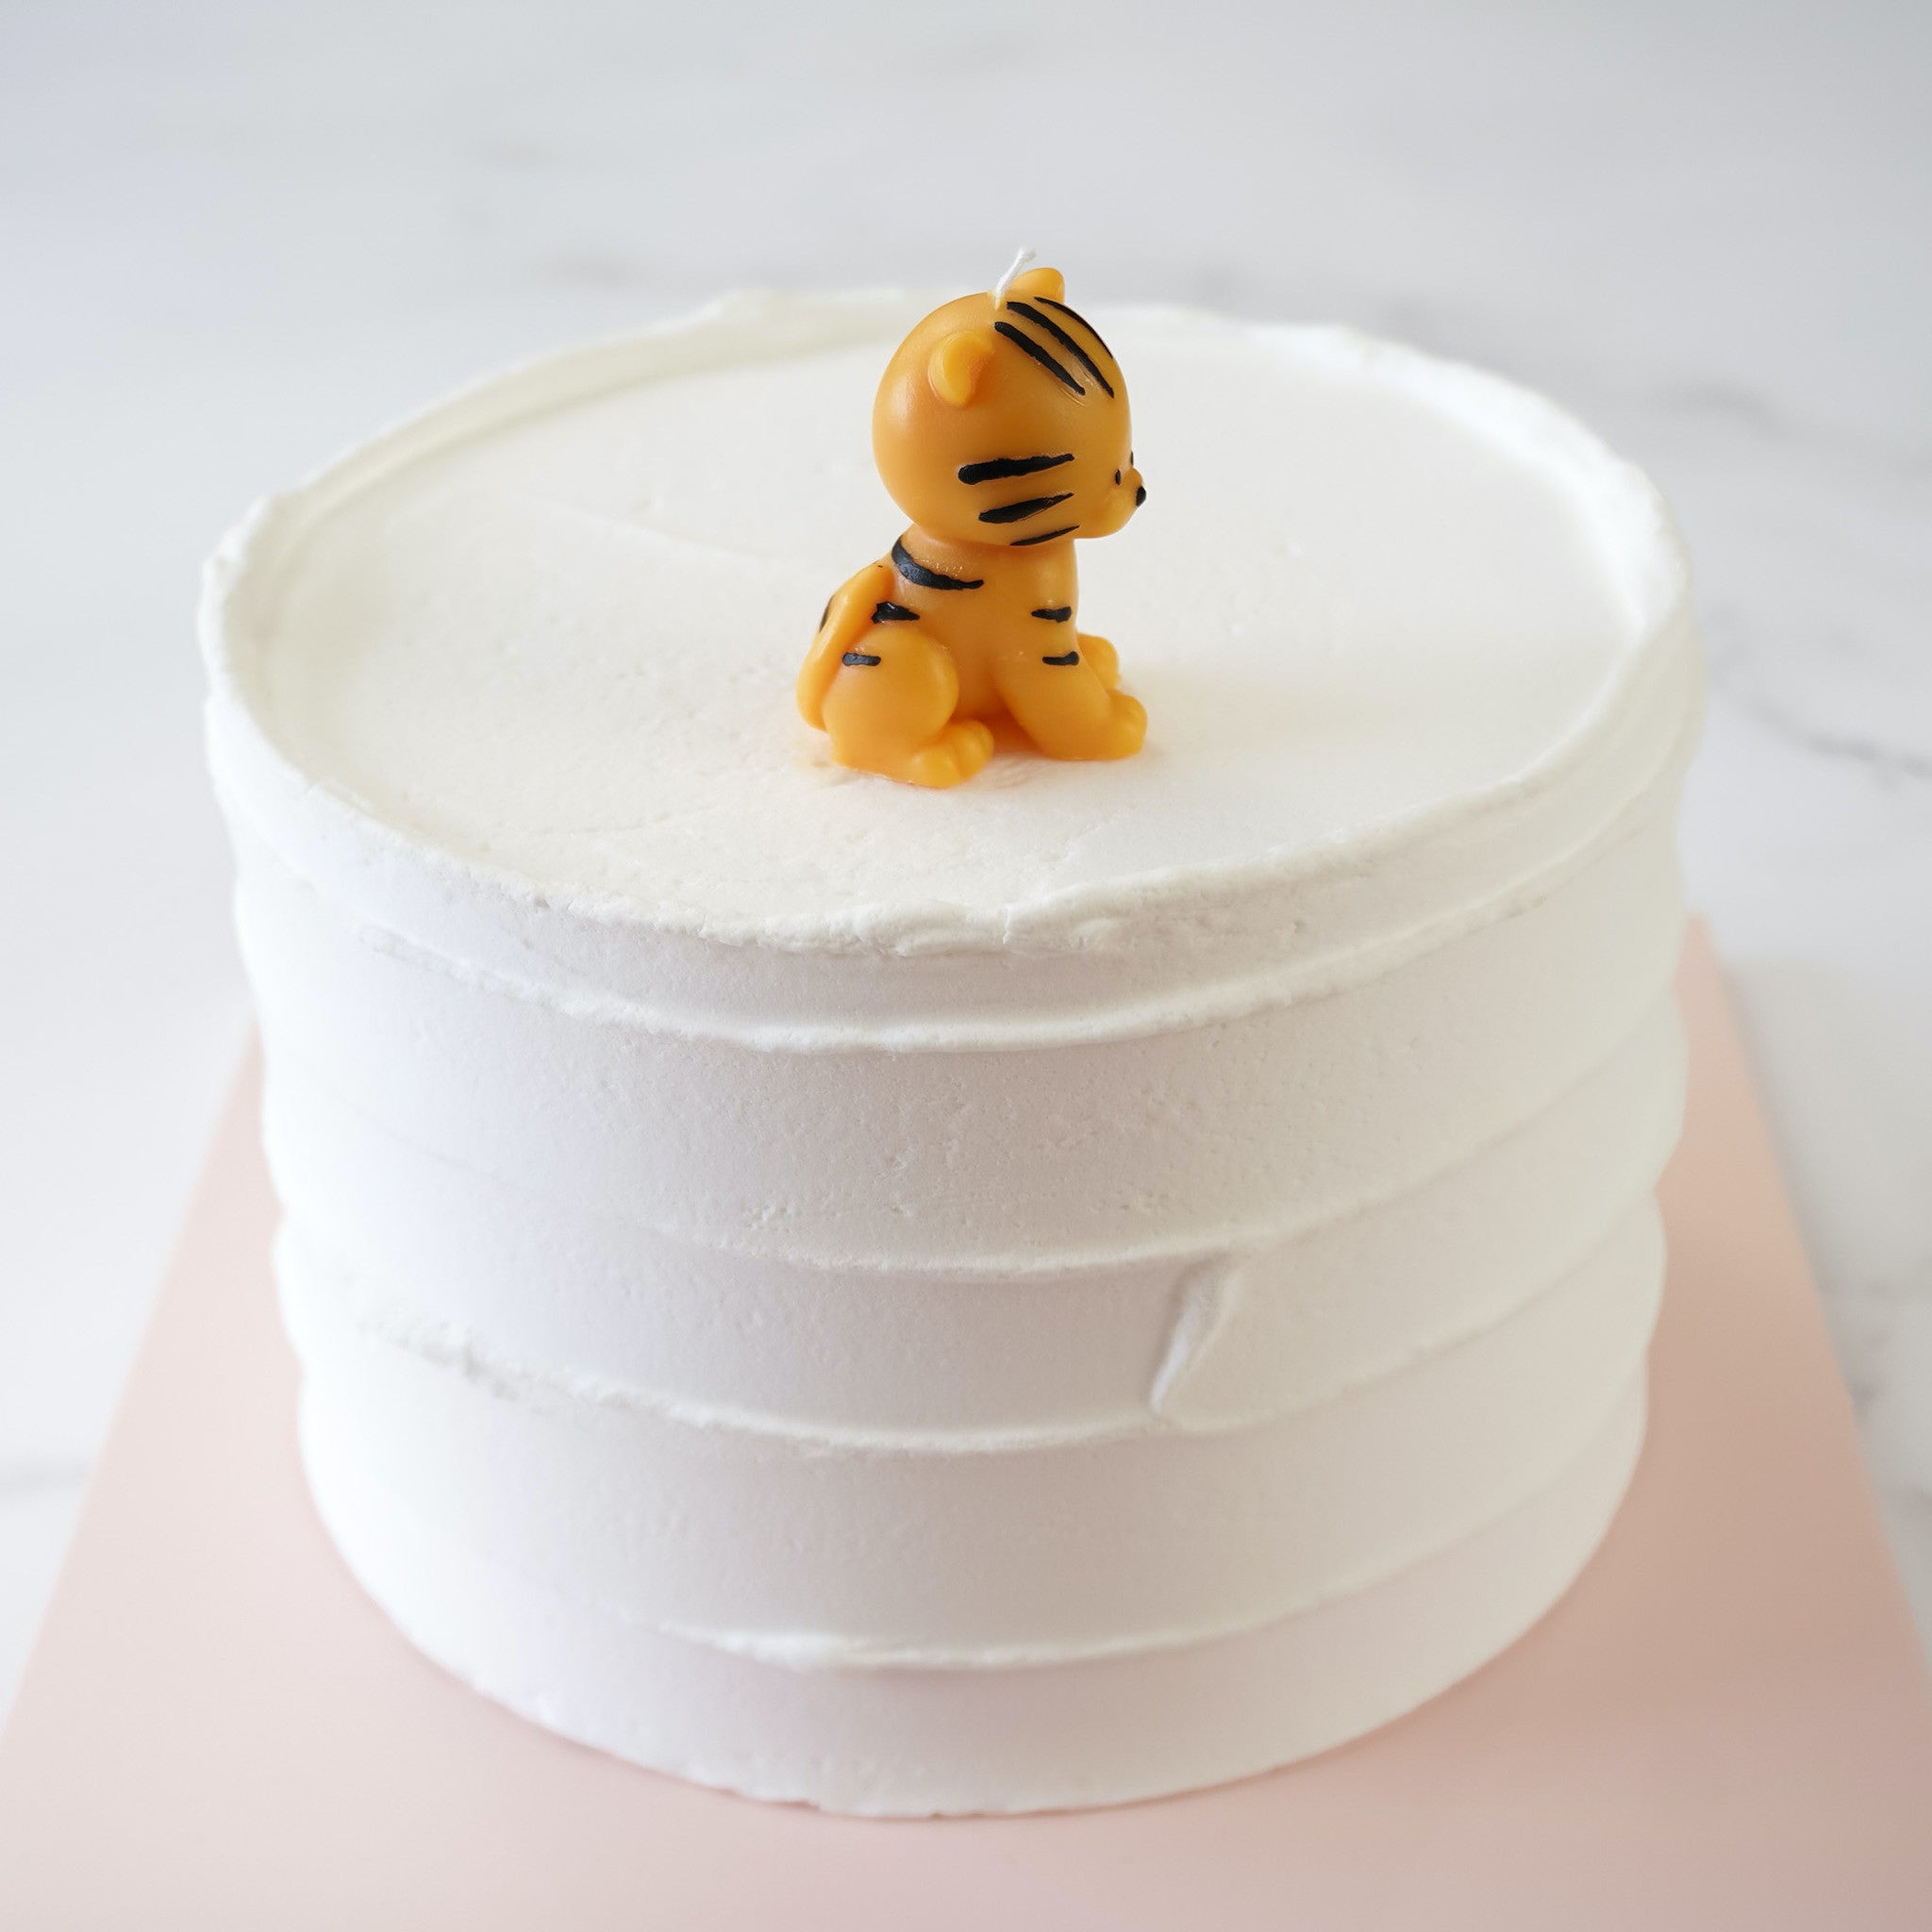 Tiger Tail Cake by DavidArsenault on DeviantArt